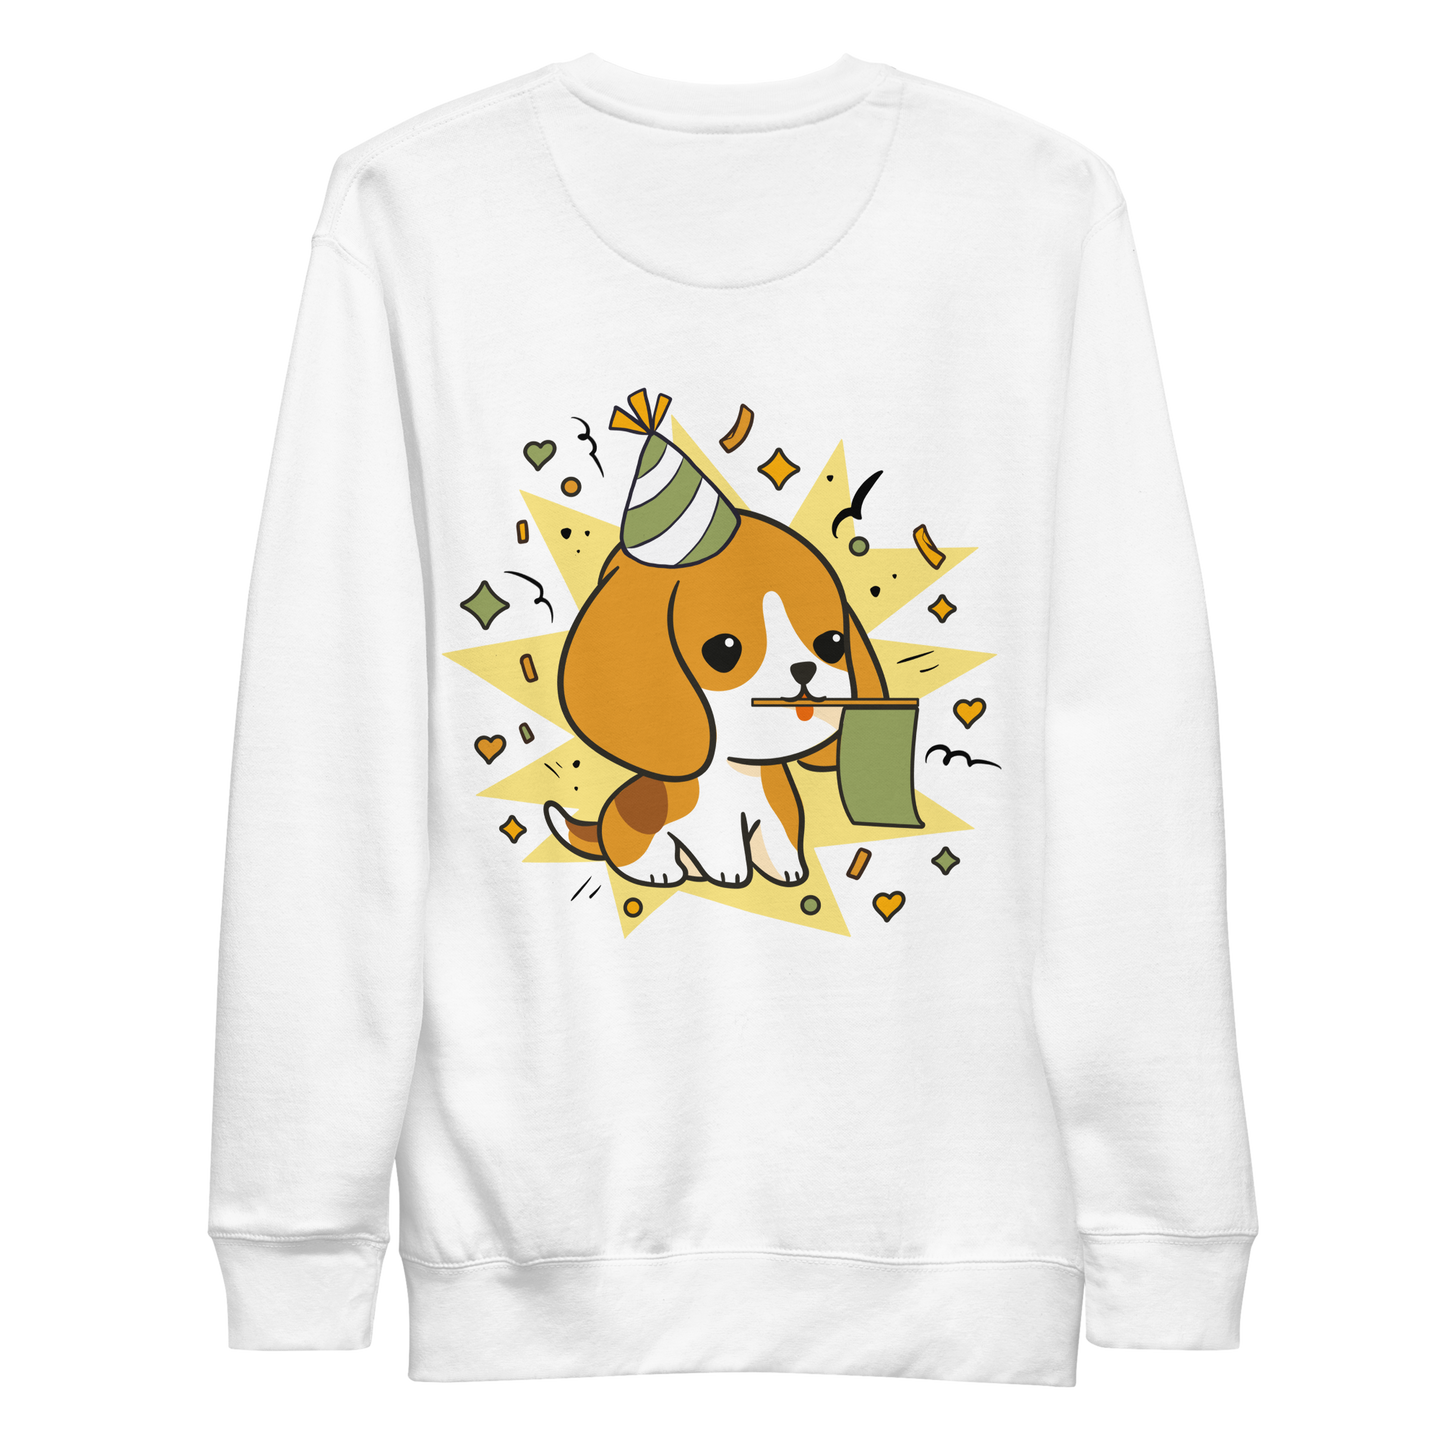 Cute celebrating beagle dog | Unisex Premium Sweatshirt - F&B